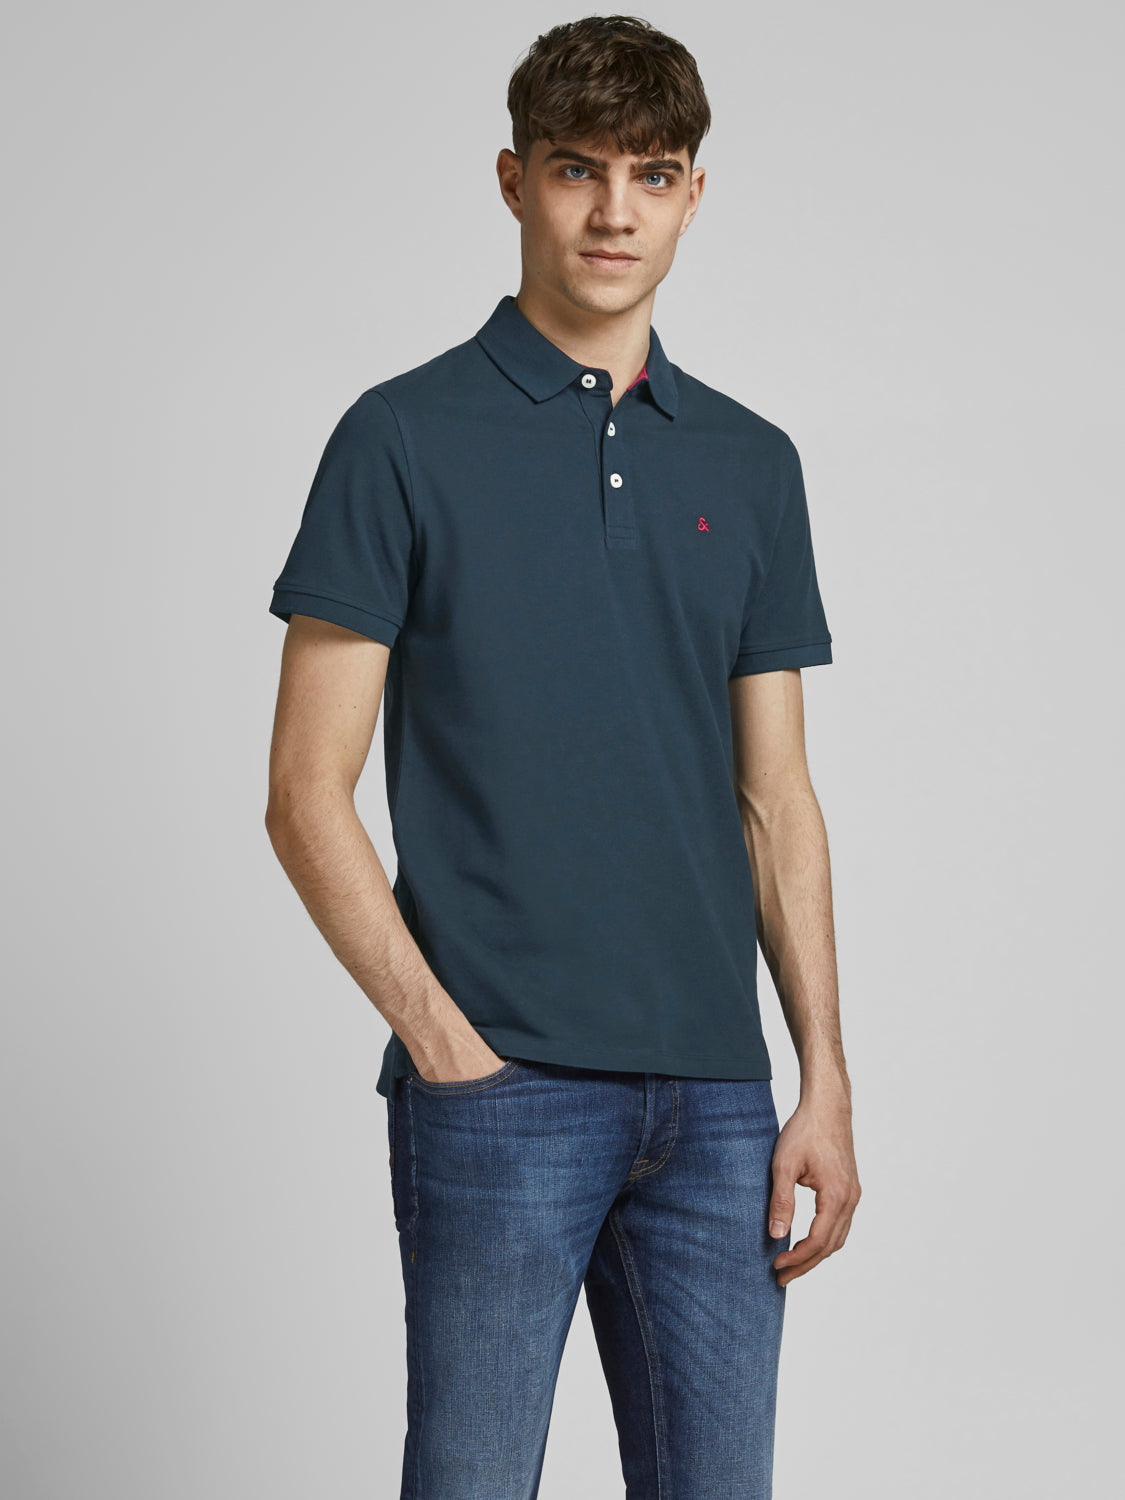 JJEPAULOS Polo Shirt - Navy Blazer